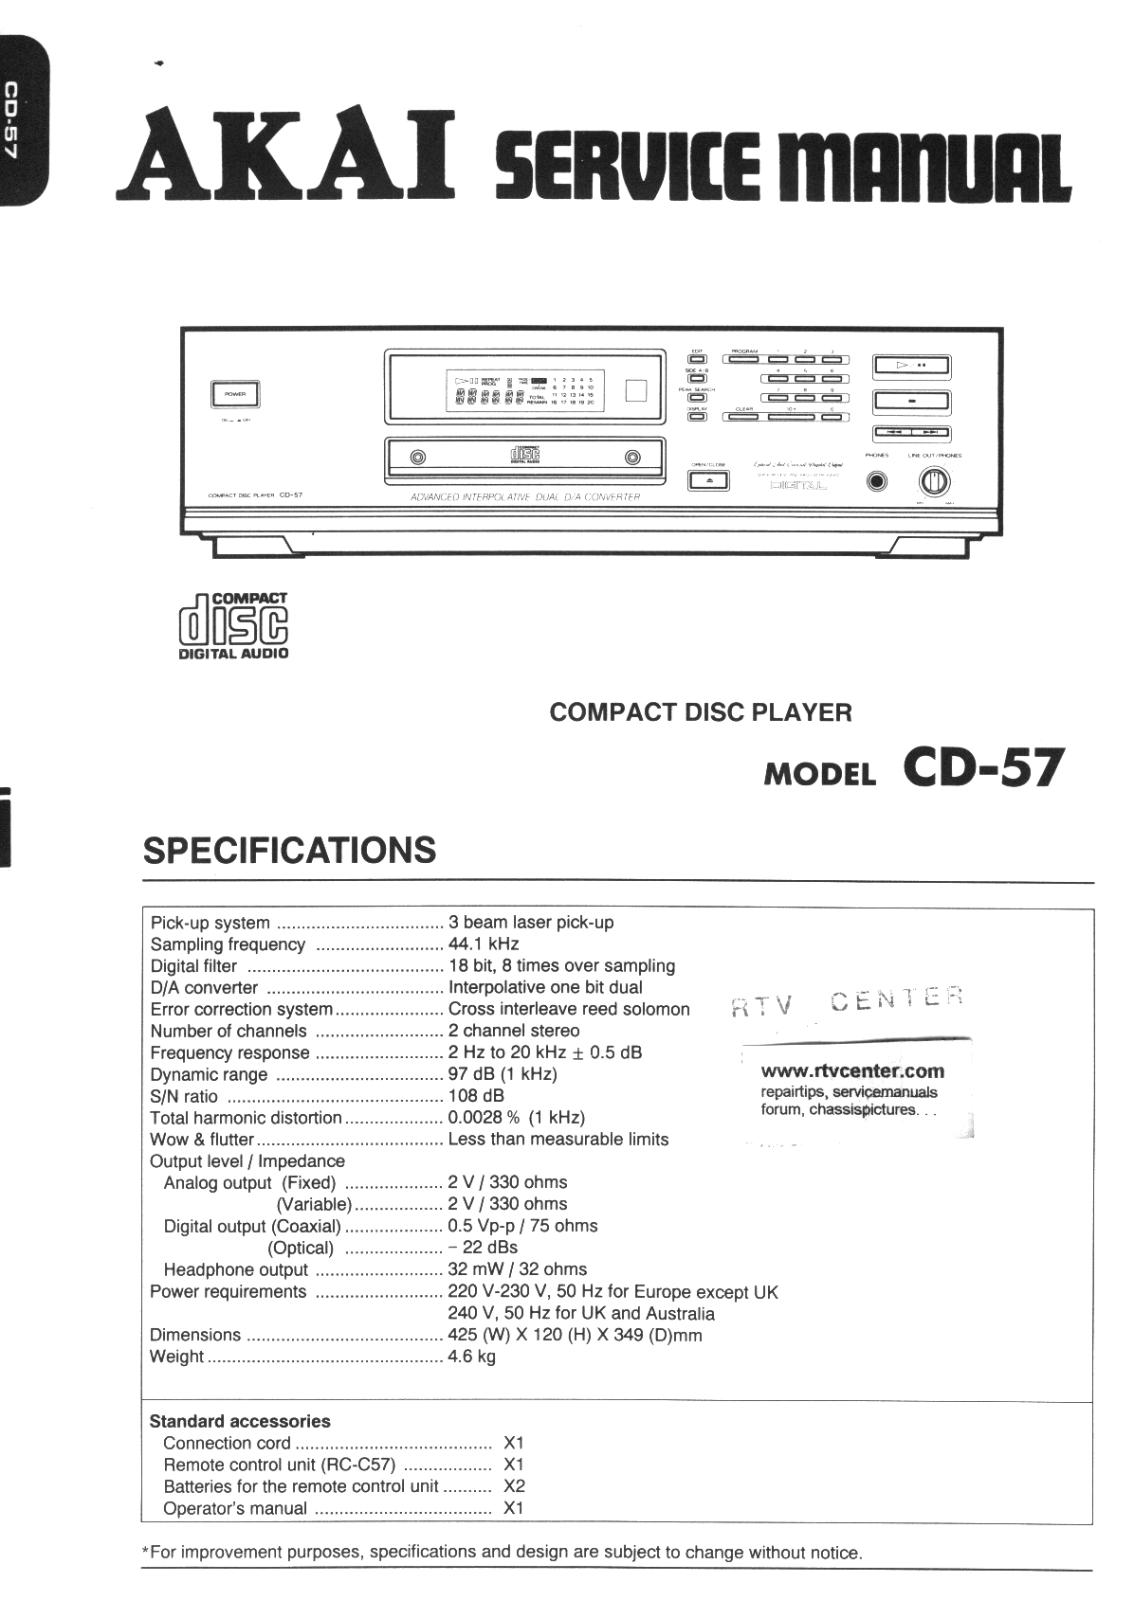 Akai CD-57 Service manual